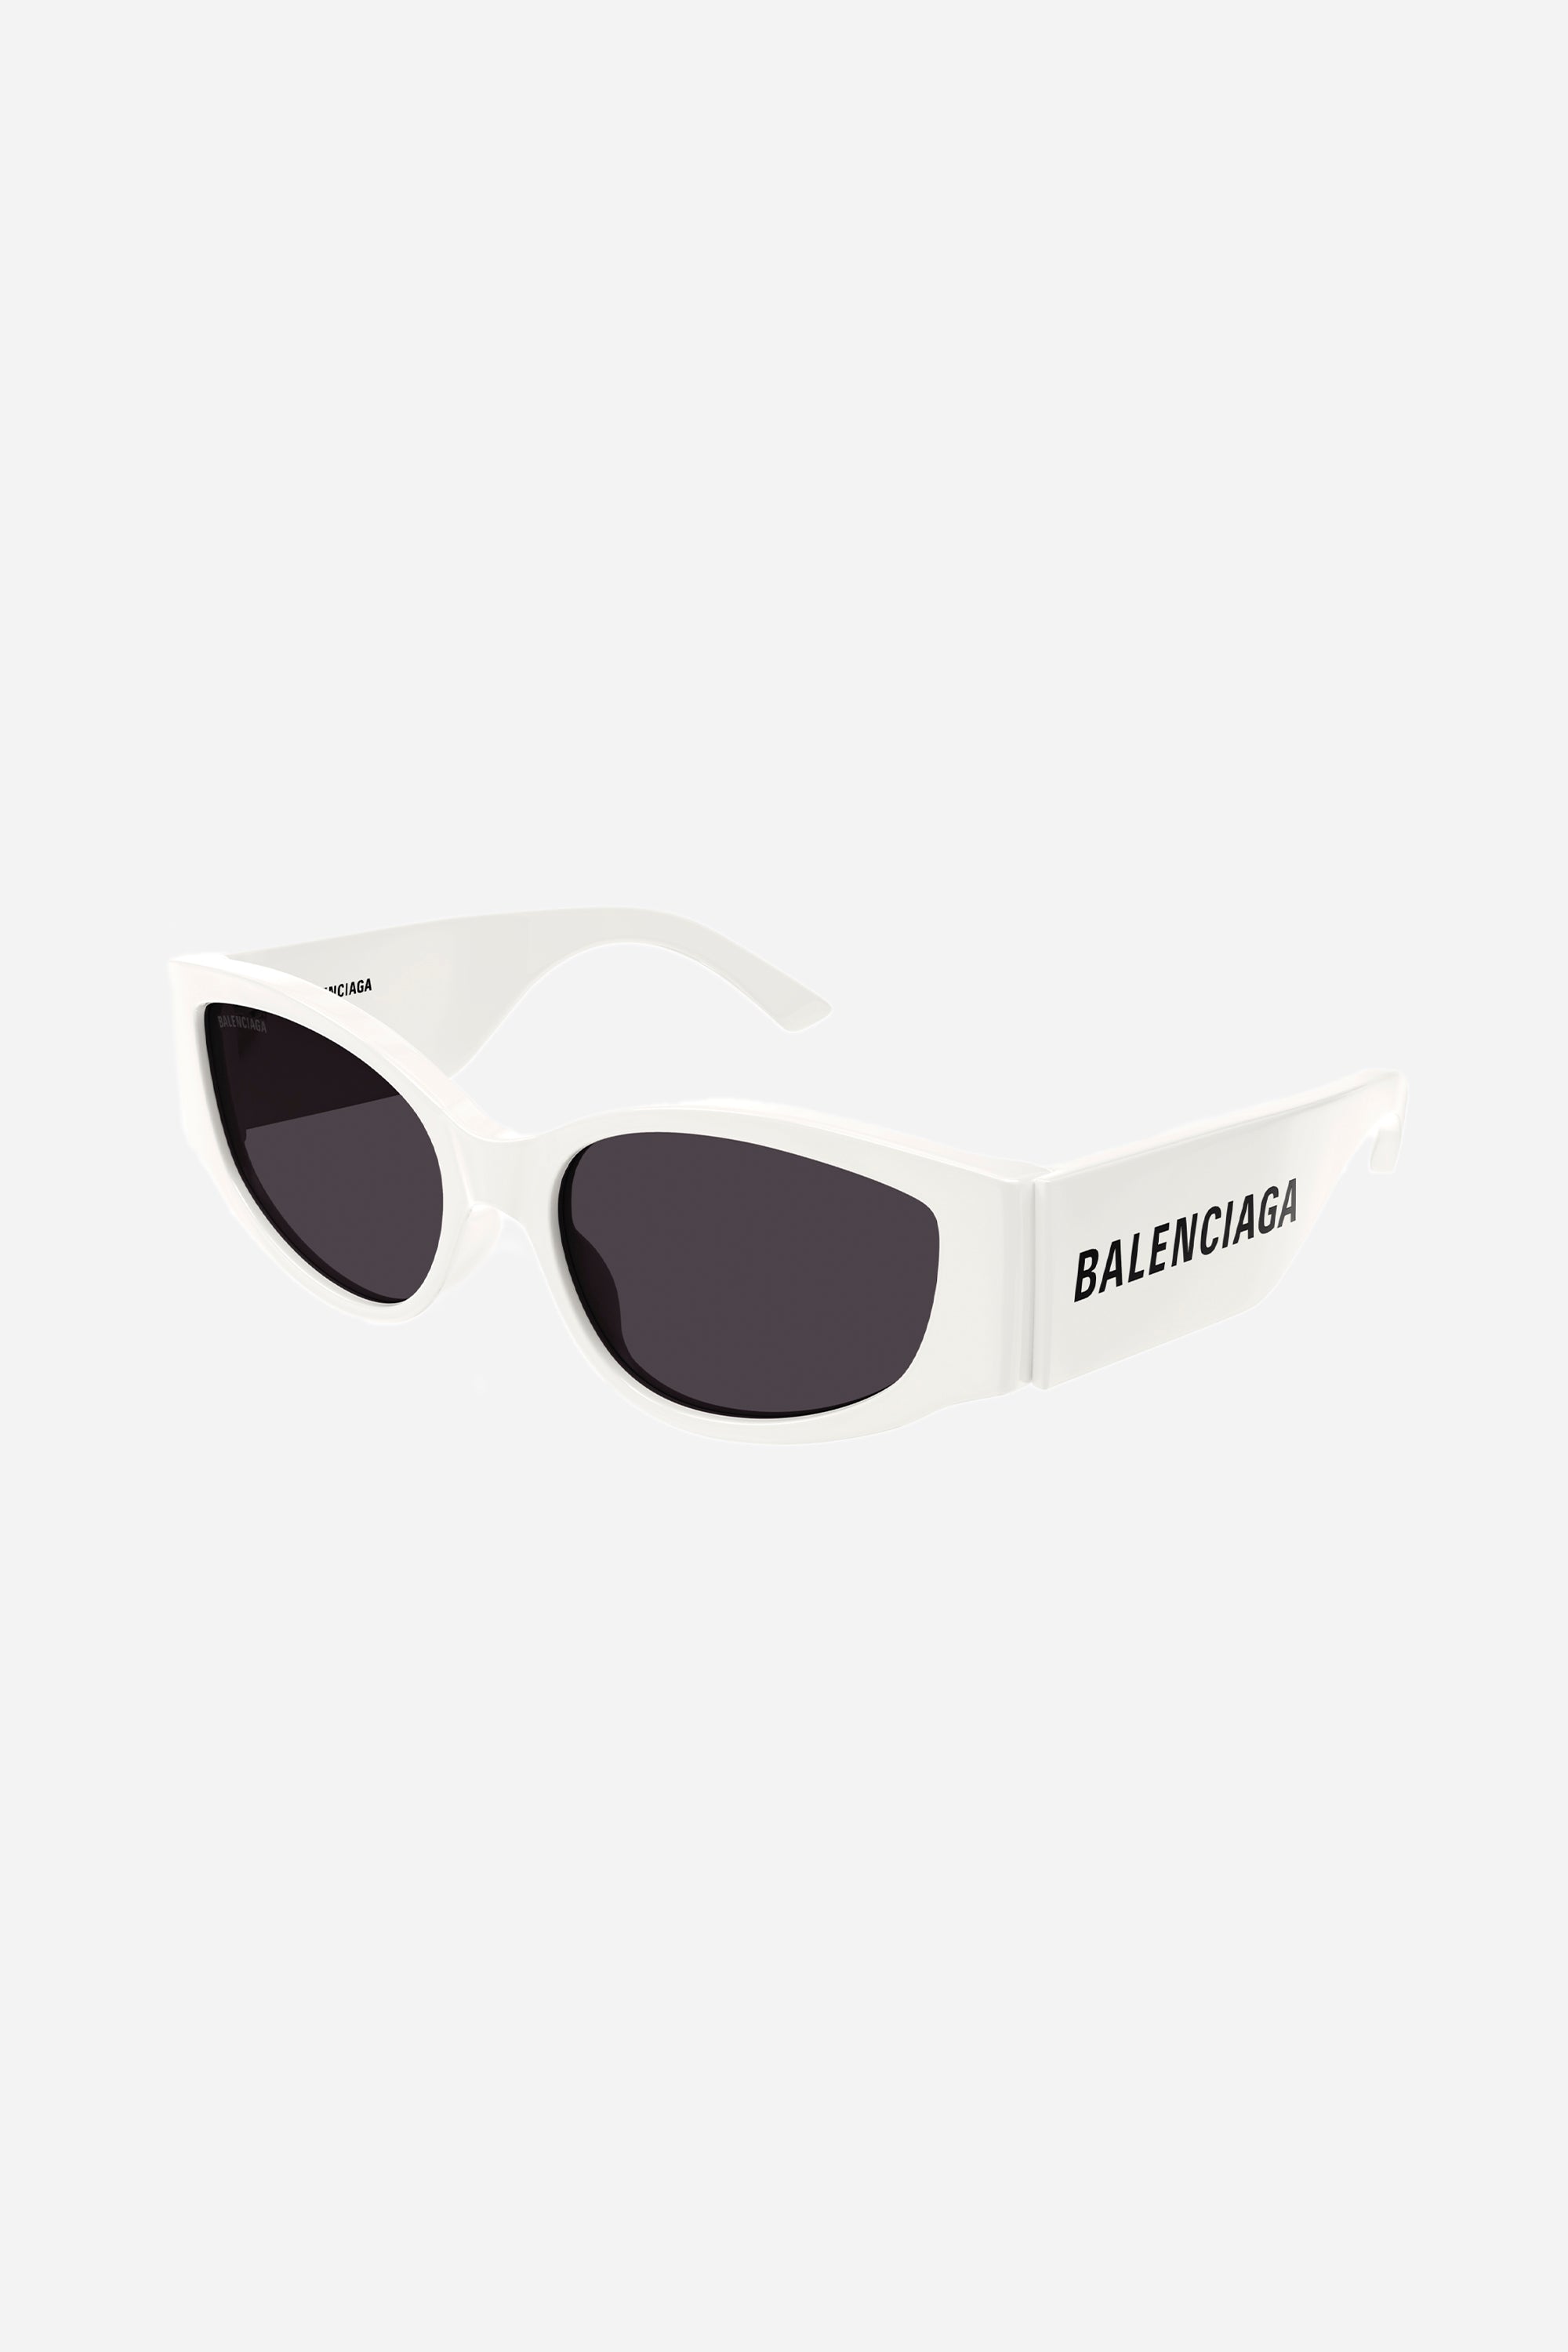 Balenciaga chunky white sunglasses - Eyewear Club